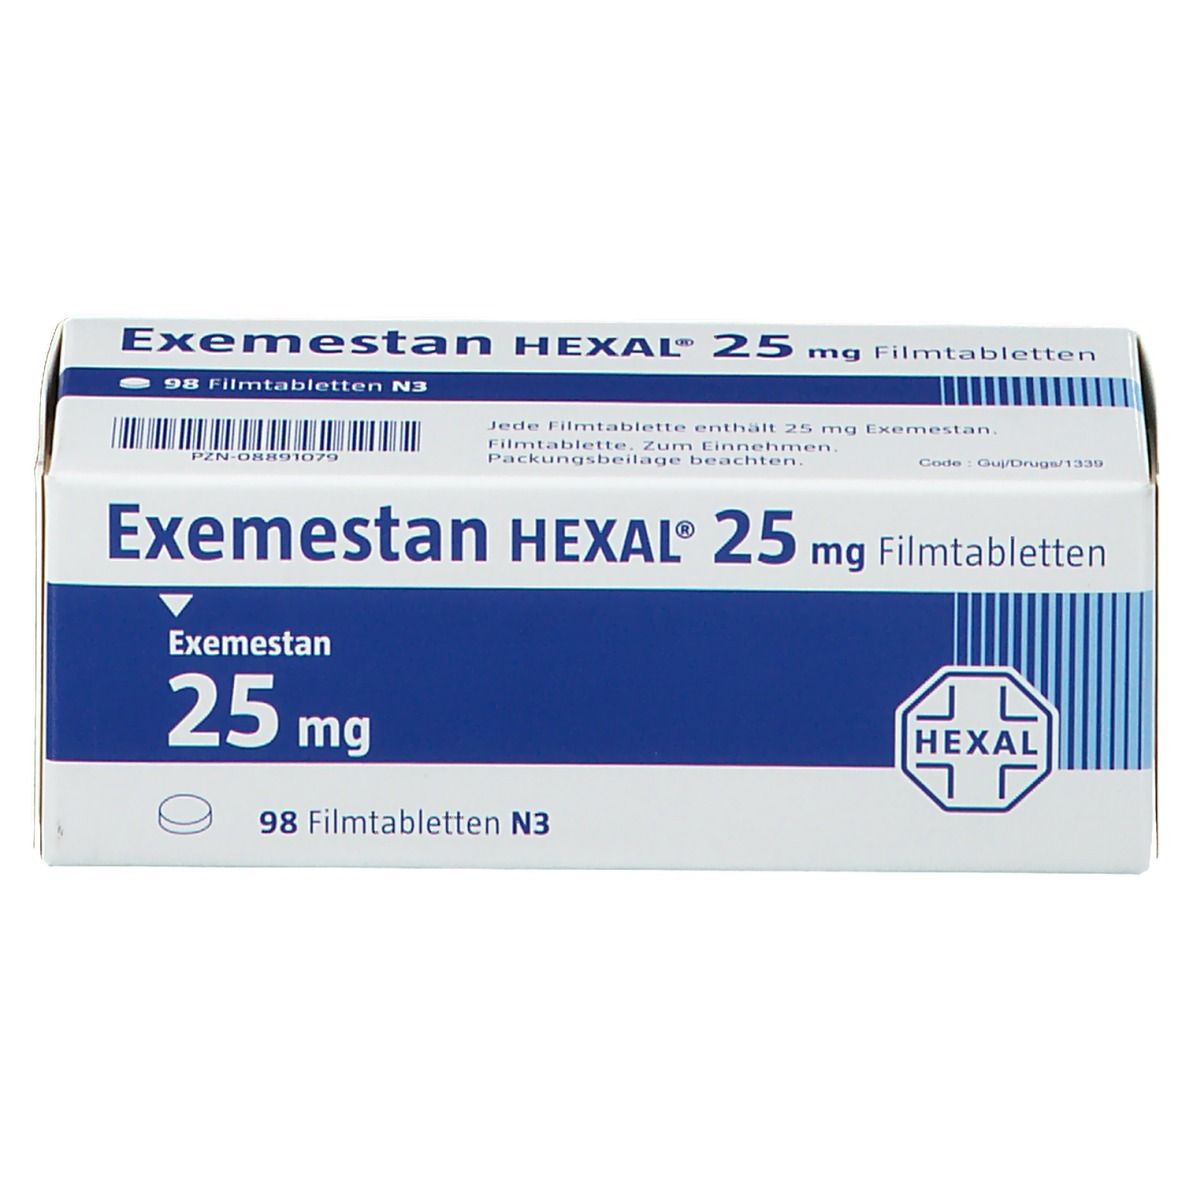 Exemestan HEXAL® 25 mg